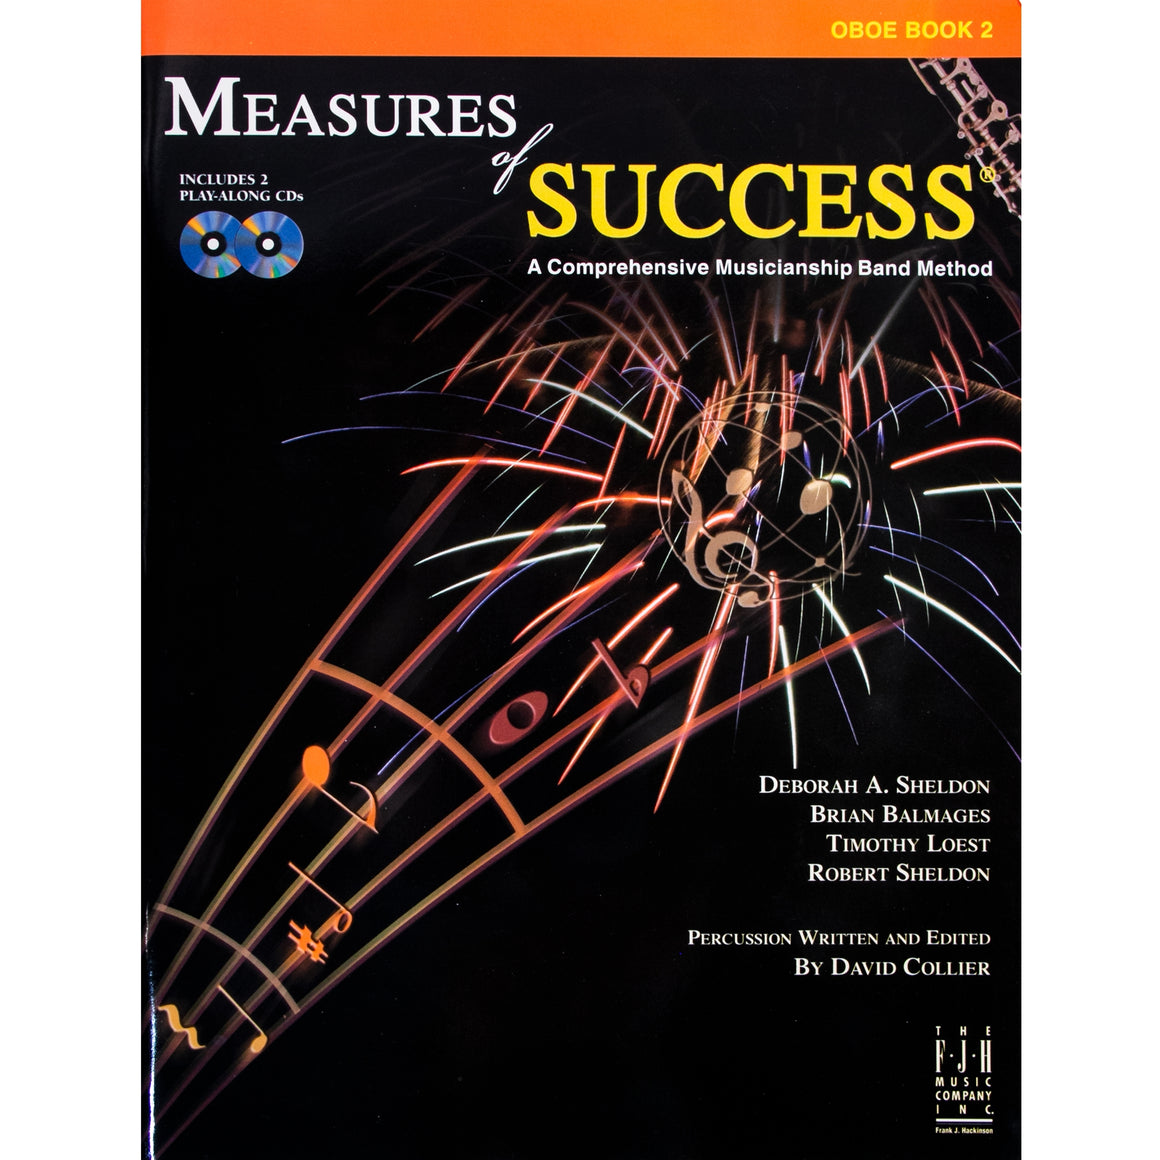 FJH PUBLISHER BB210OB Measures of Success Oboe Book 2